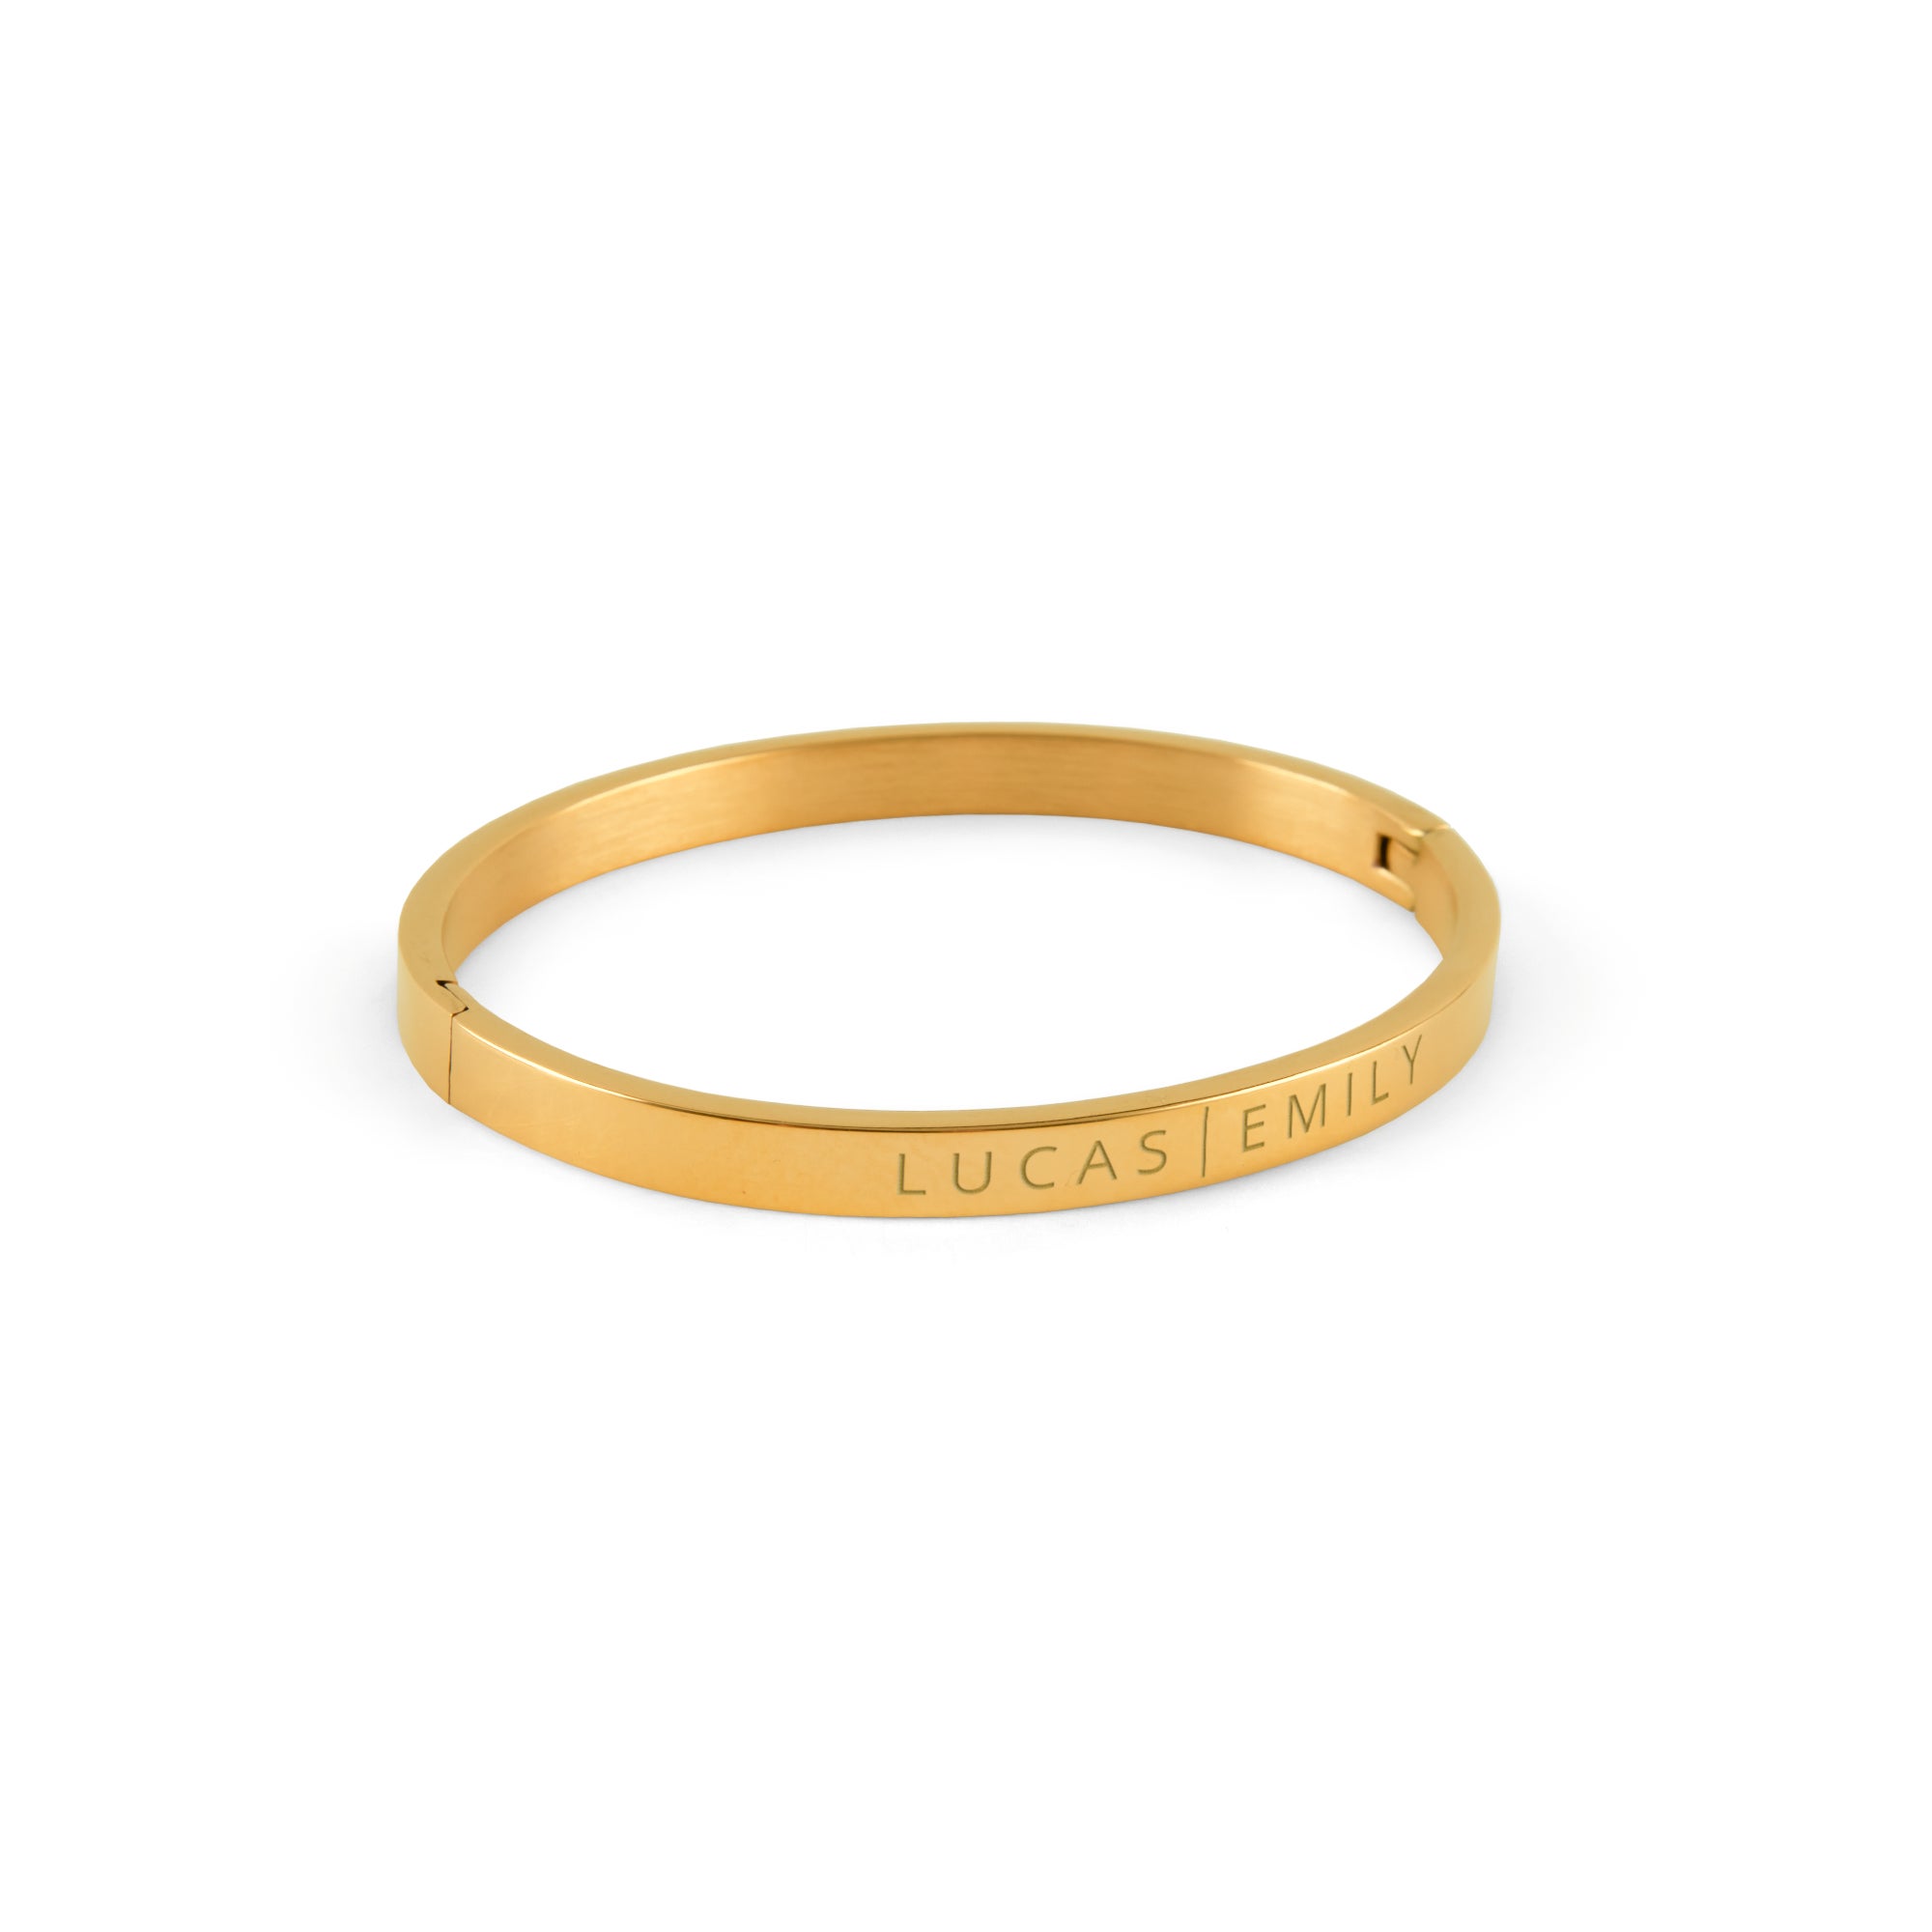 Personalised bangle bracelet - Gold colour